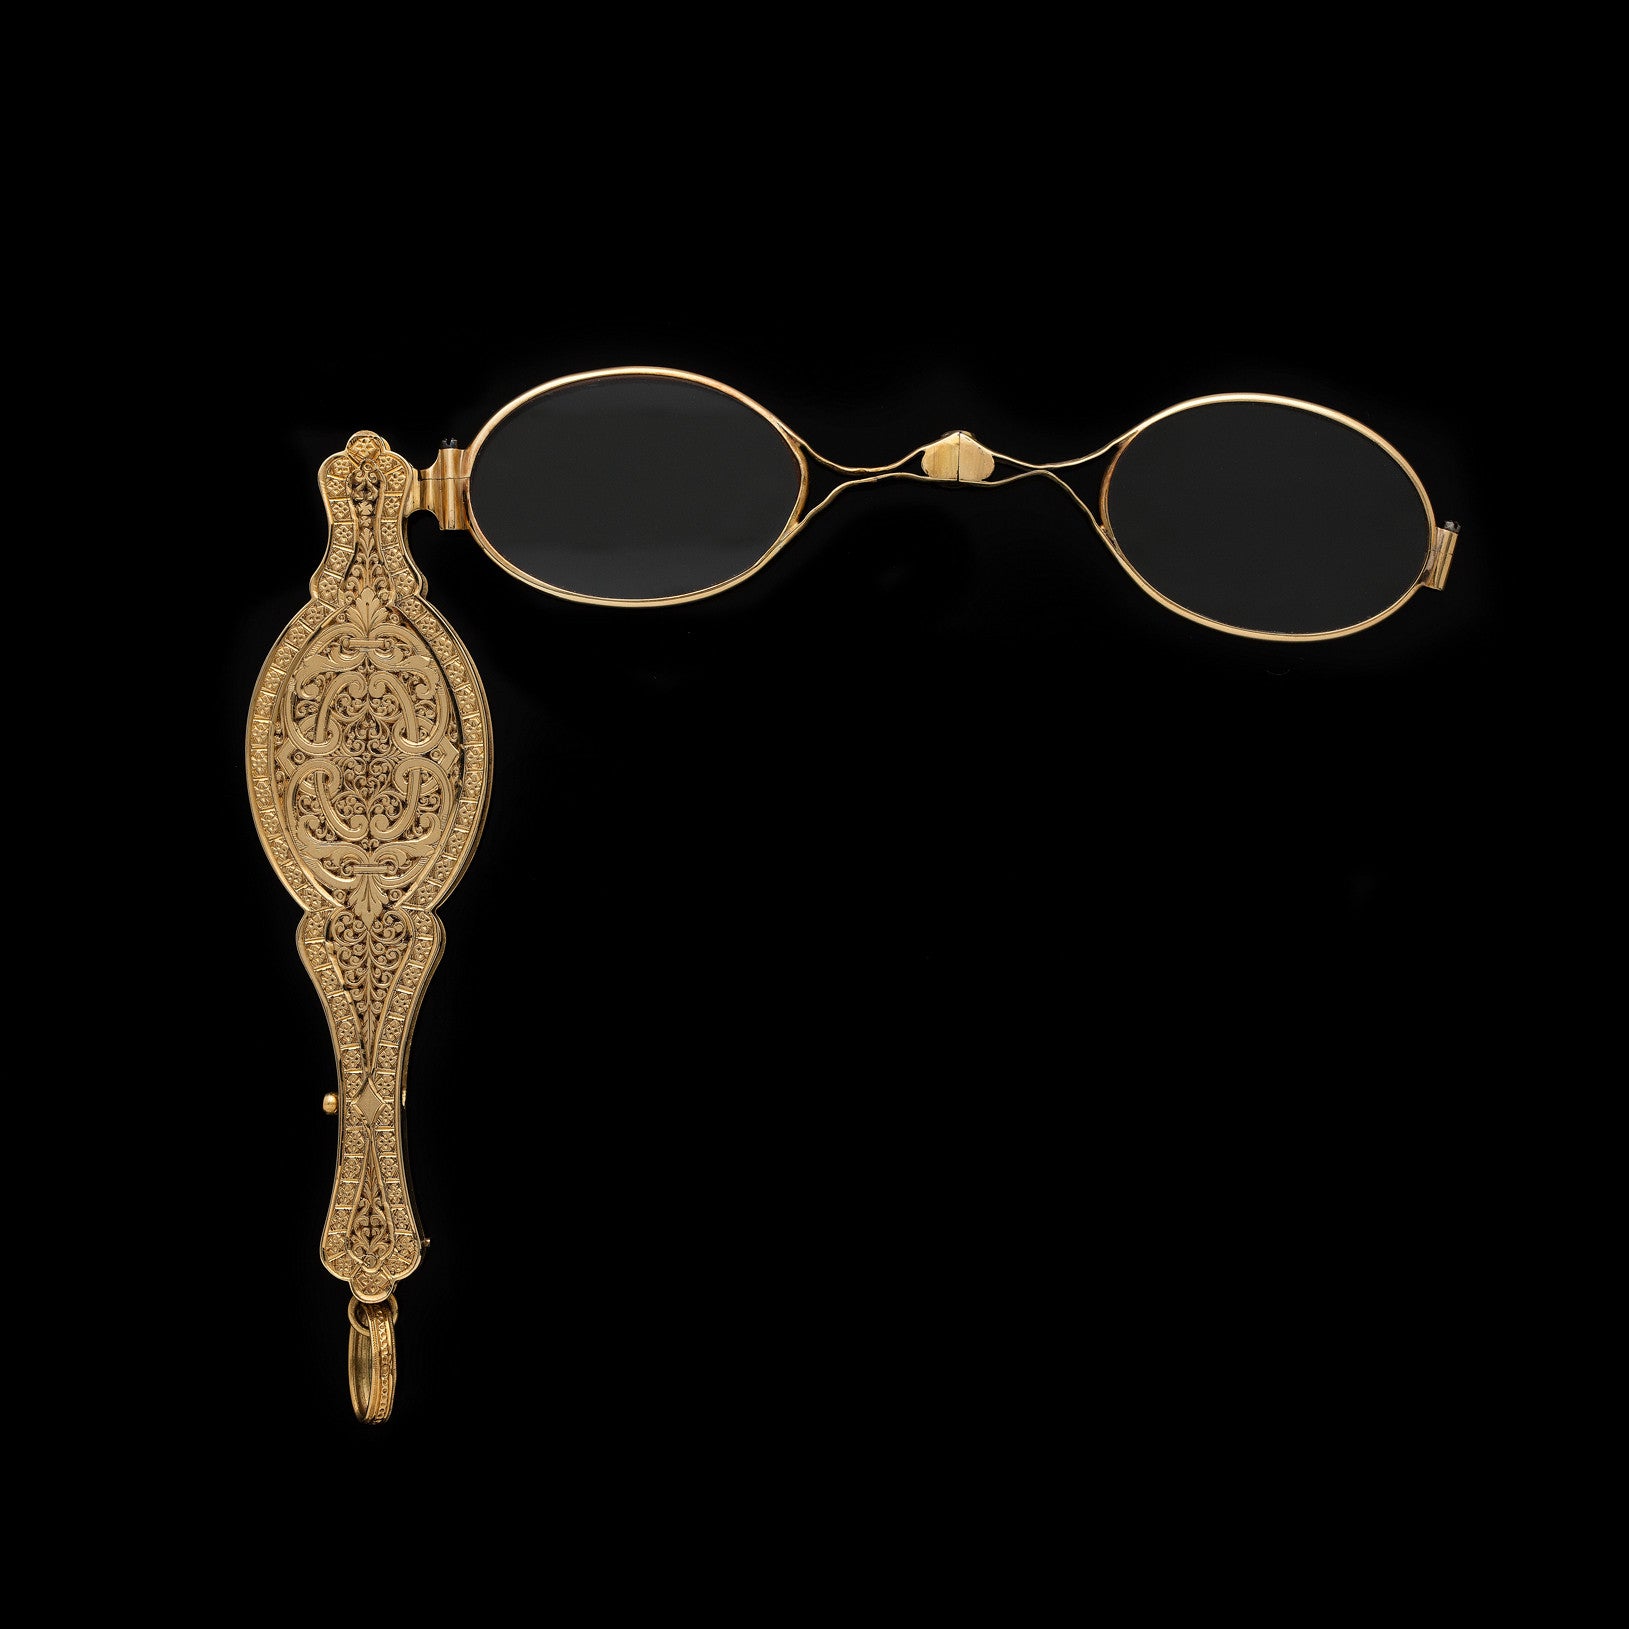 Antique 14K Gold Victorian Vintage Spectacles Lorgnette Eyeglasses